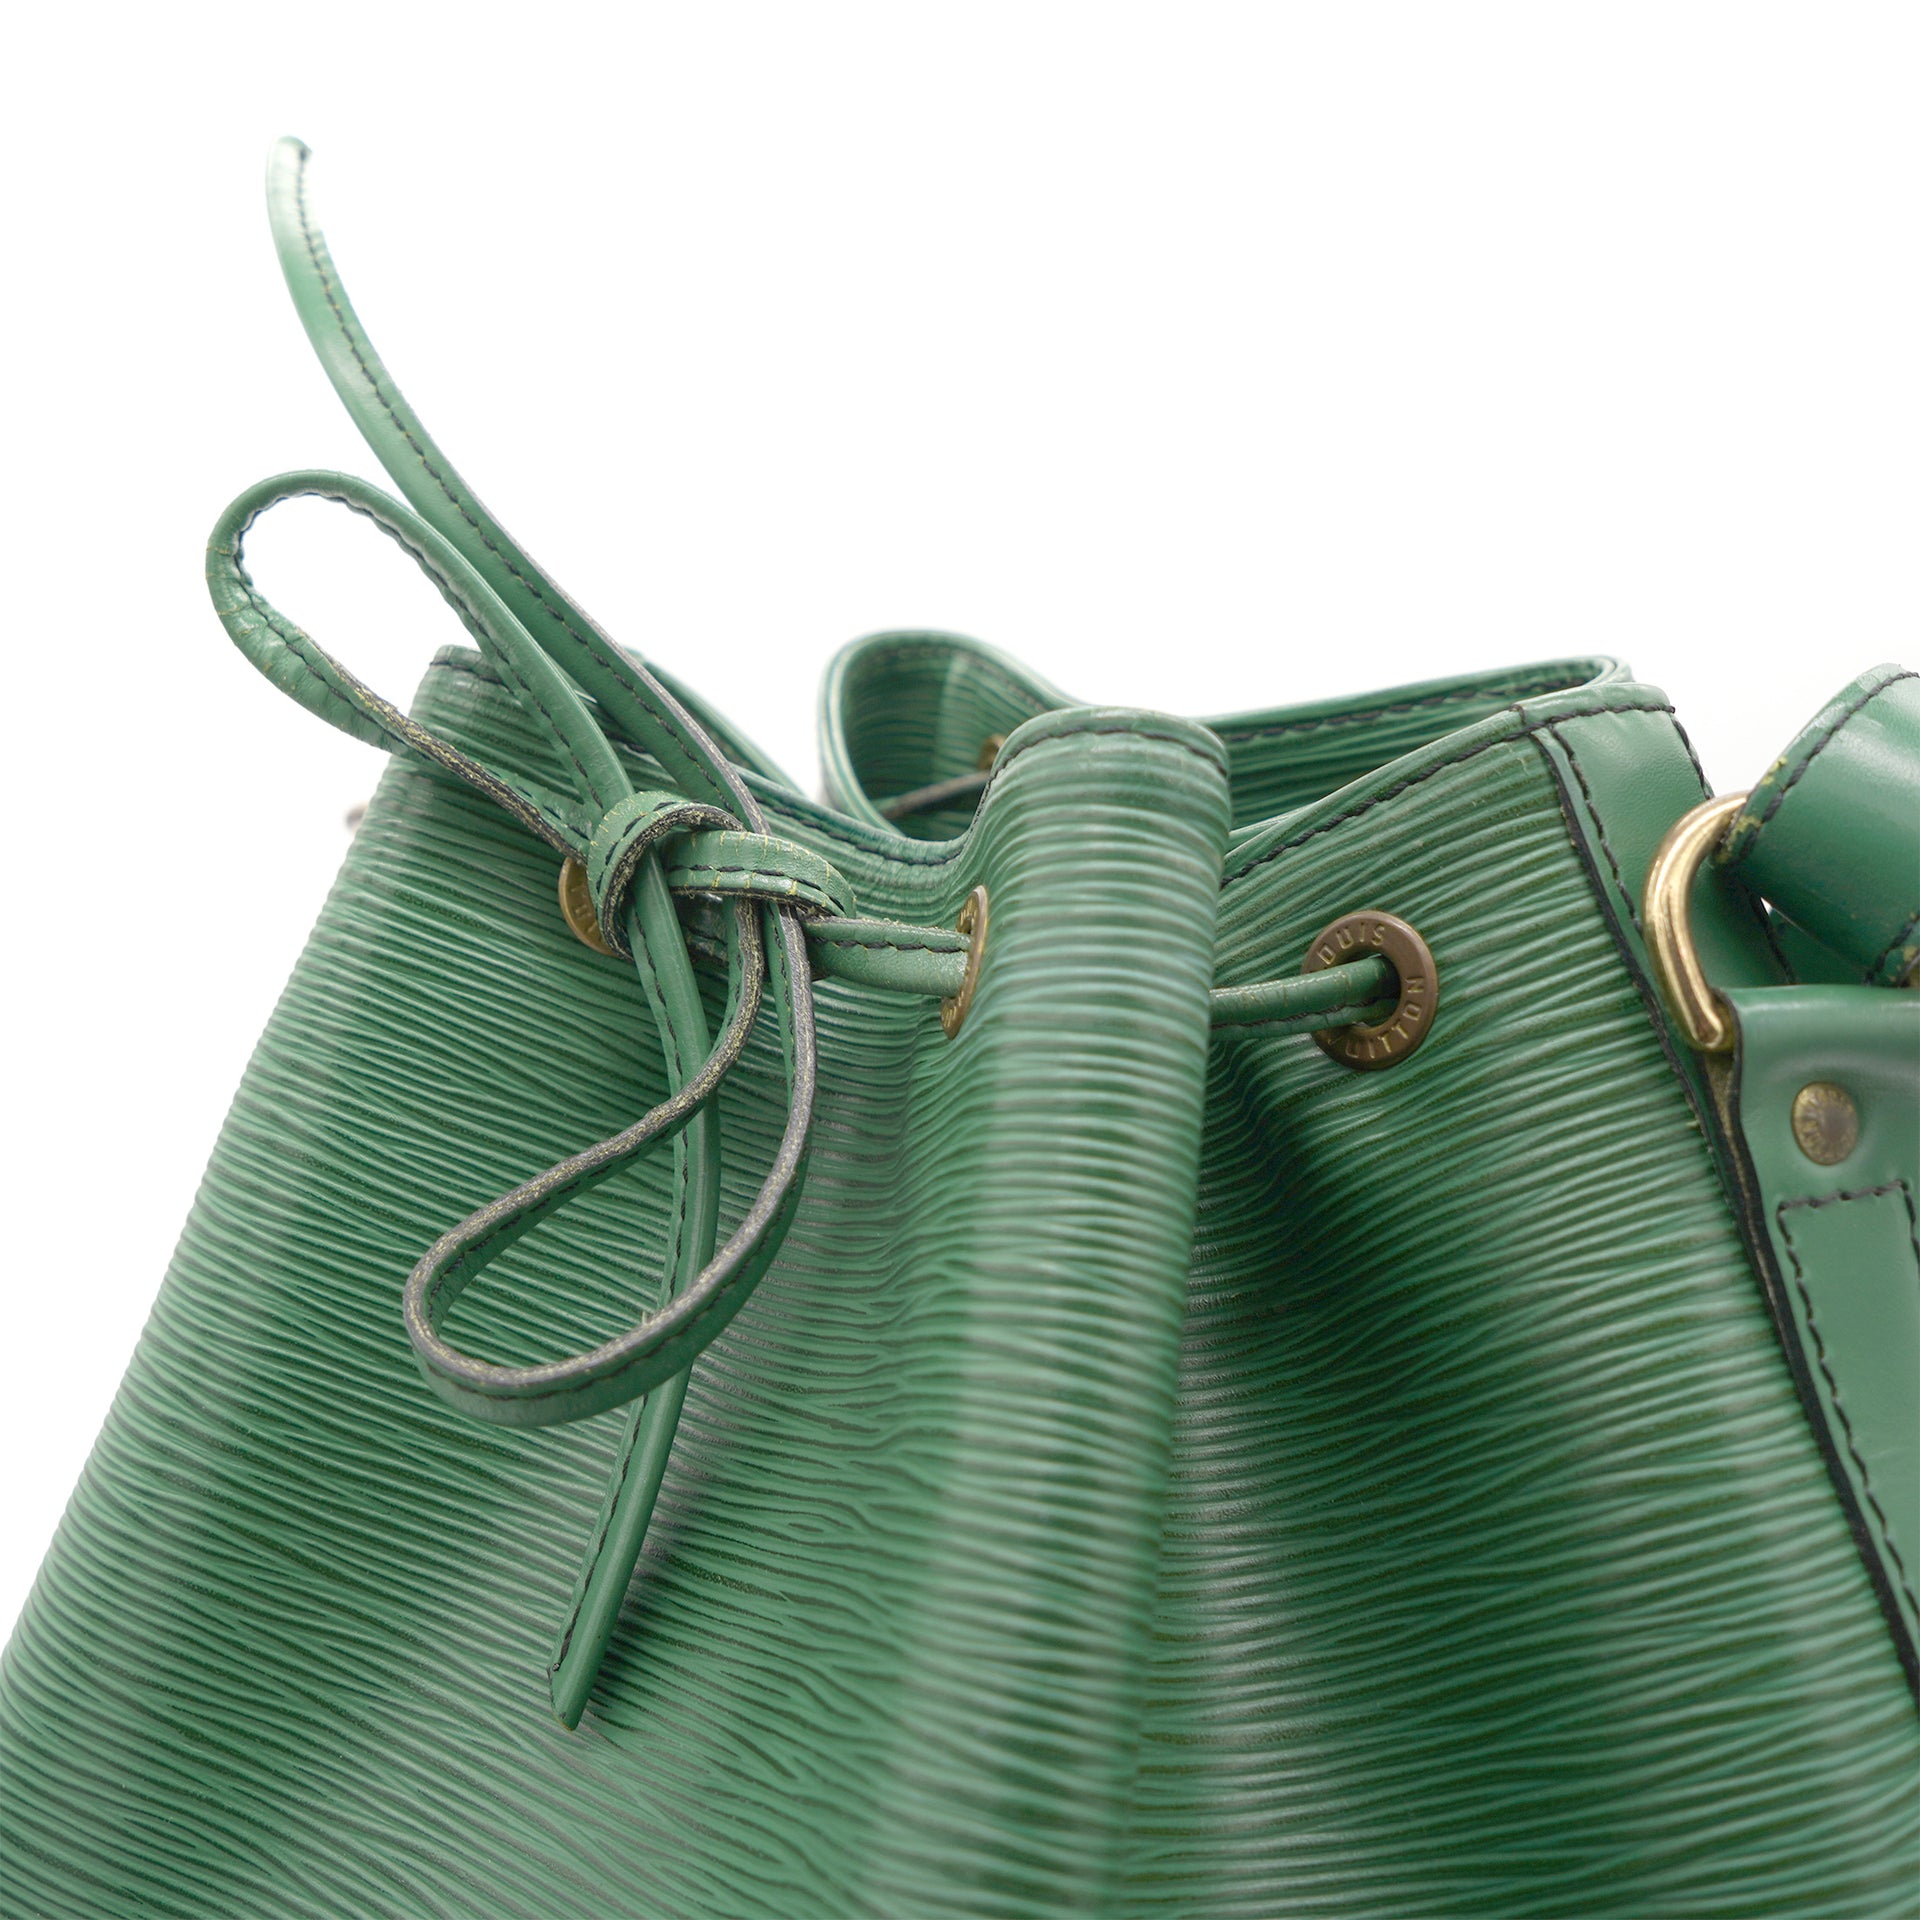 green epi leather